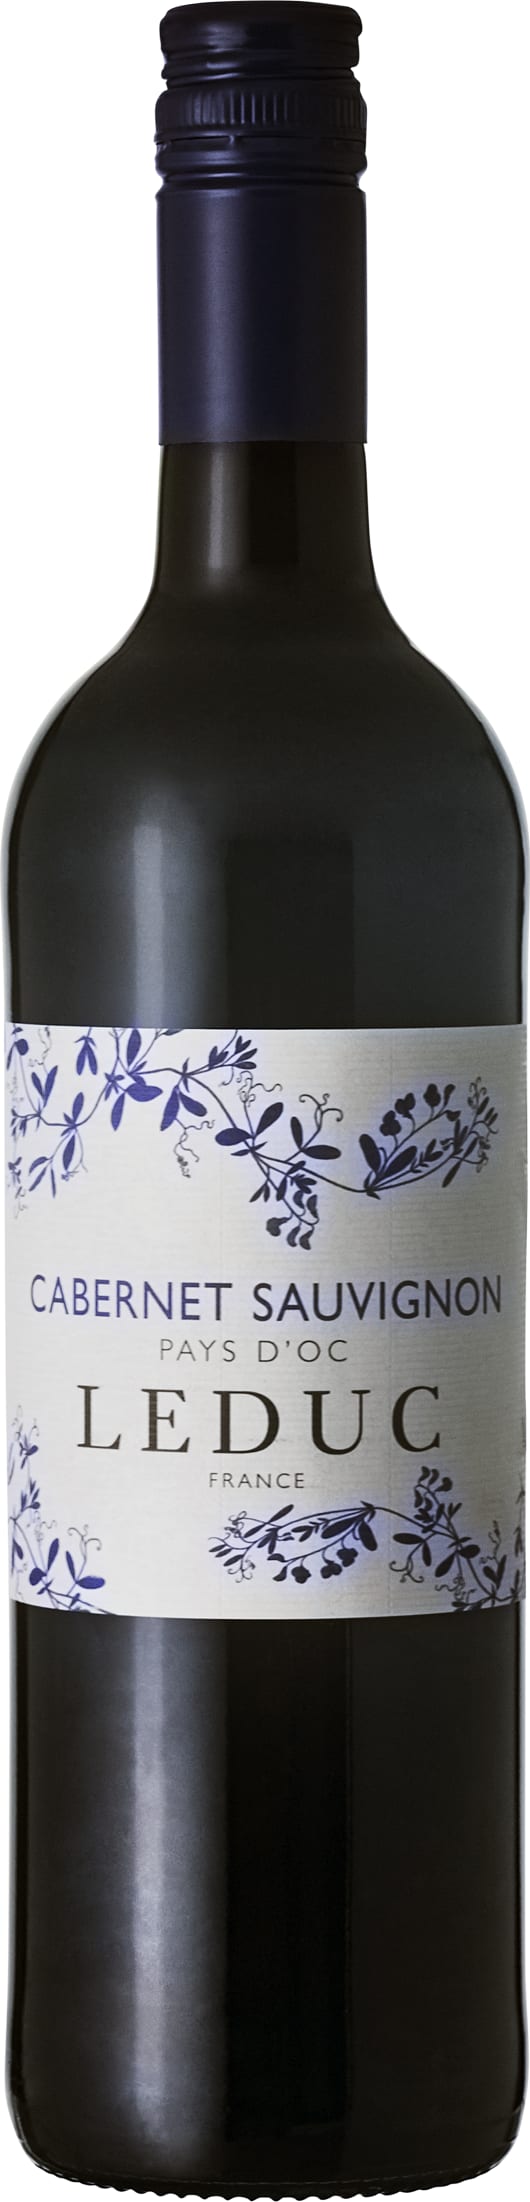 Leduc Cabernet Sauvignon 2021 75cl - Buy Leduc Wines from GREAT WINES DIRECT wine shop